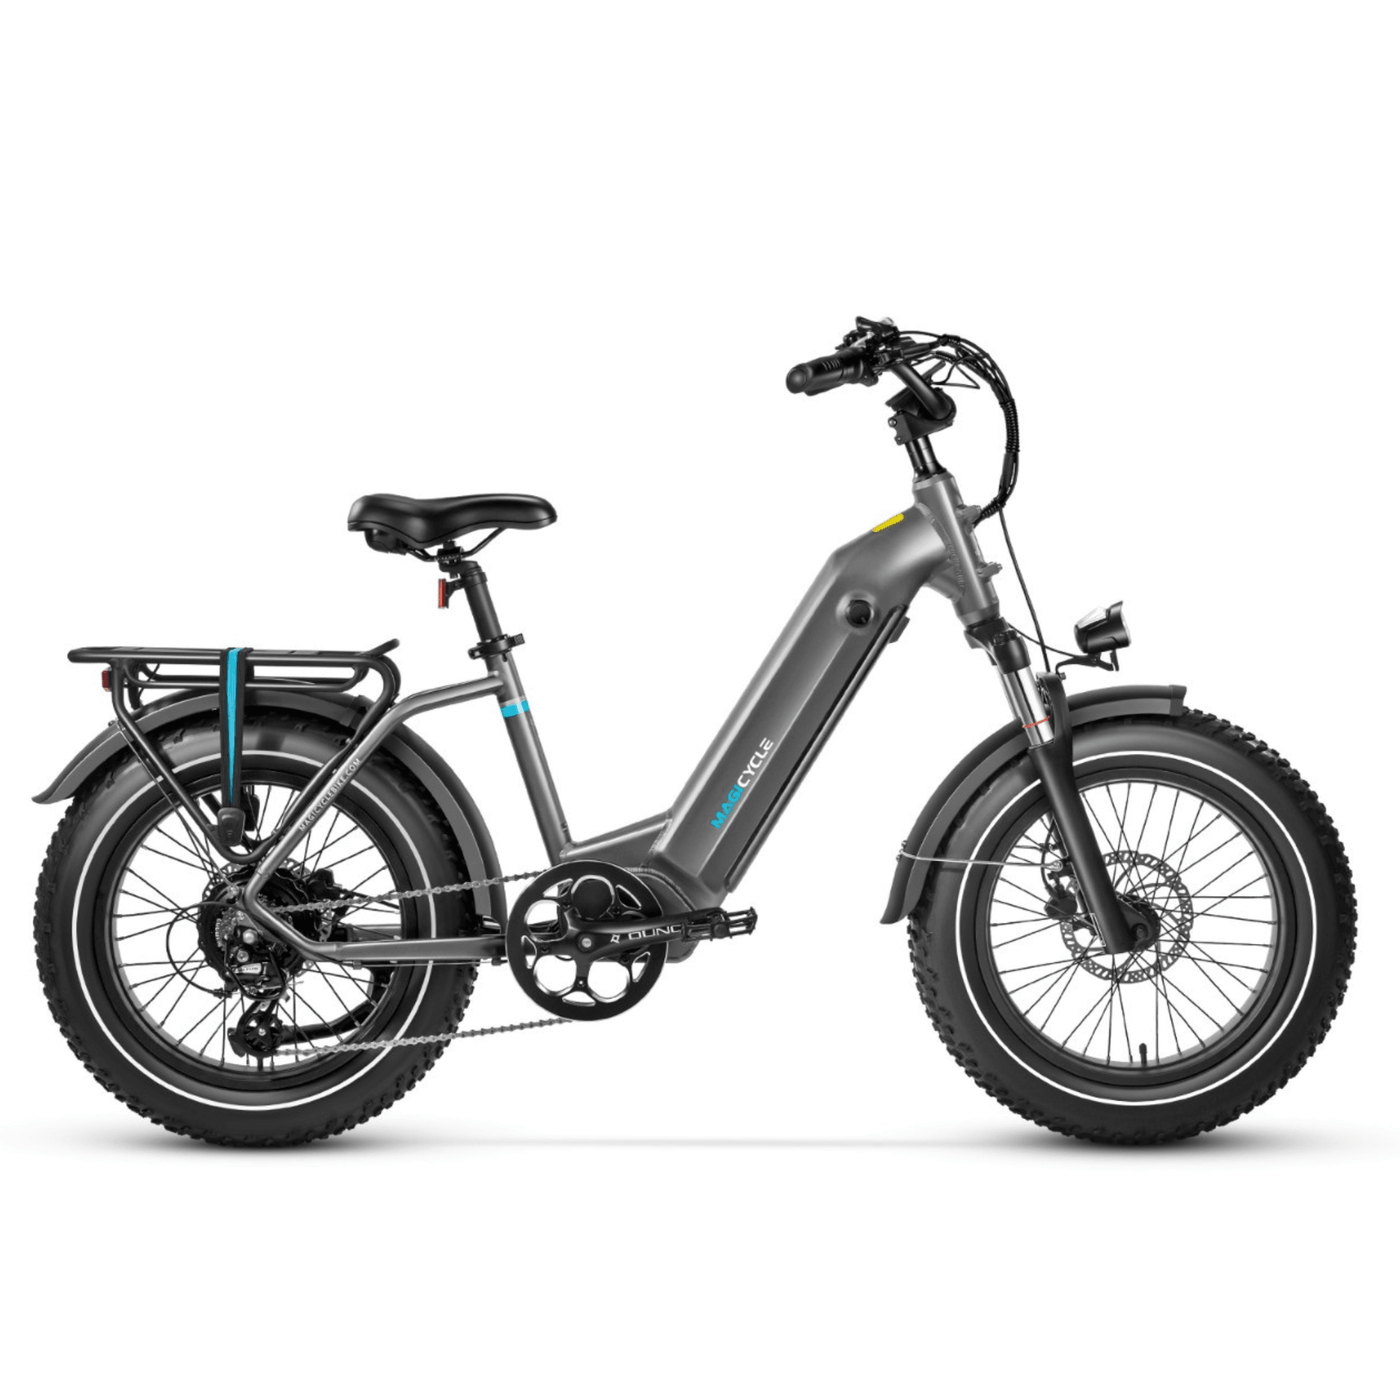 MagiCycle Ocelot Pro 750W 52V Long Range Step-Thru Electric Bike - Rider Cycles 